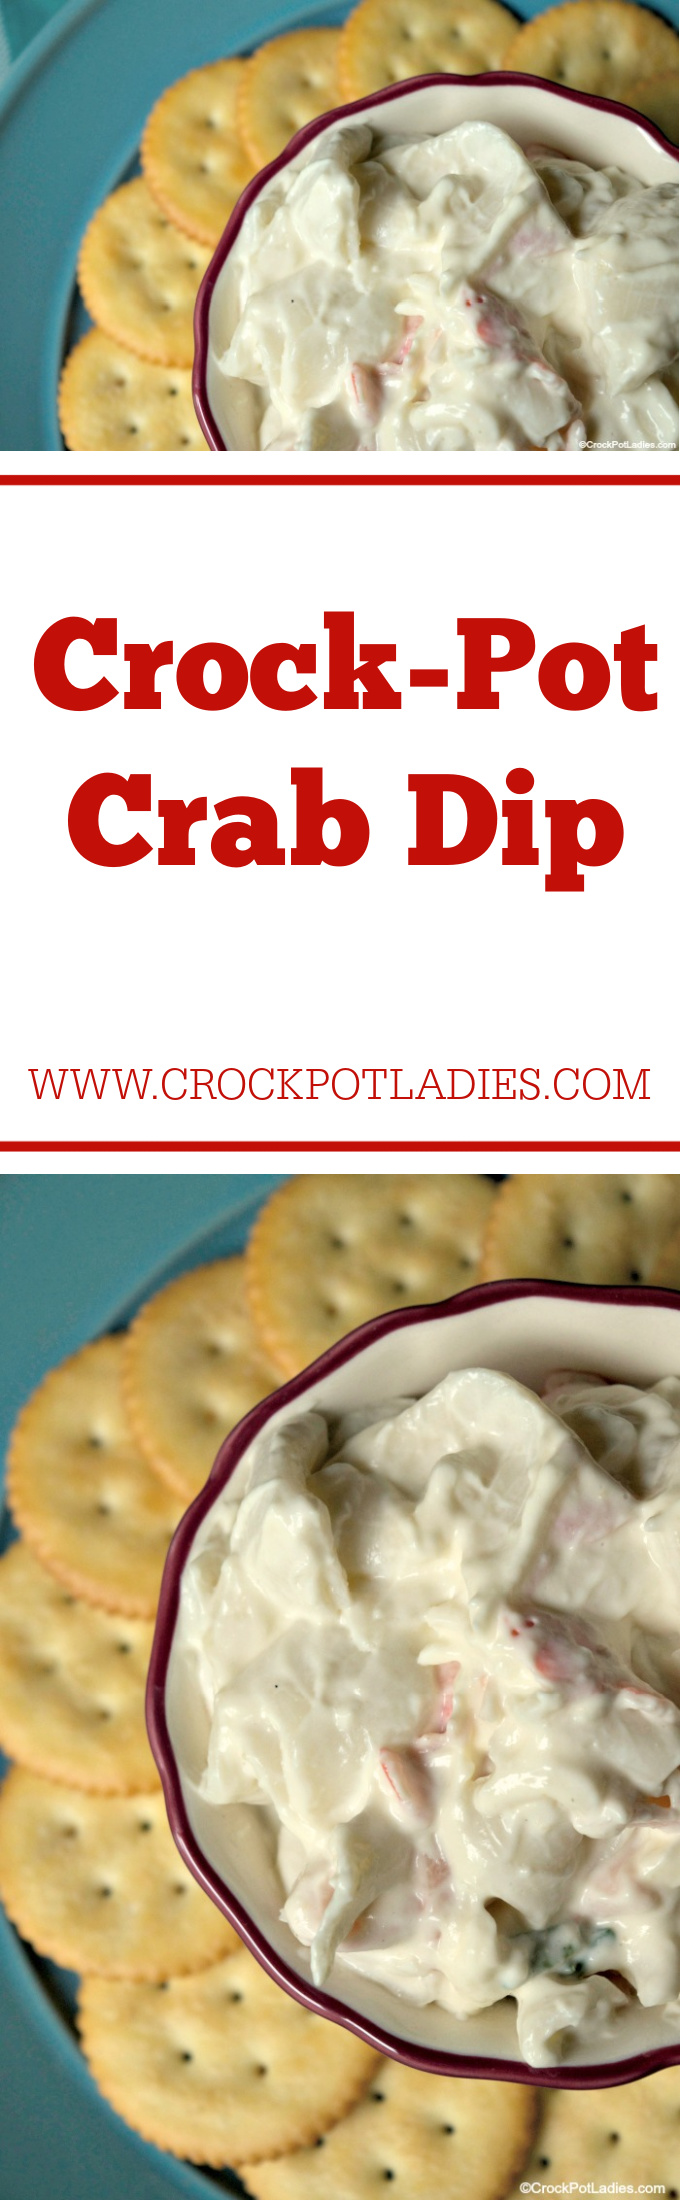 Crock-Pot Crab Dip